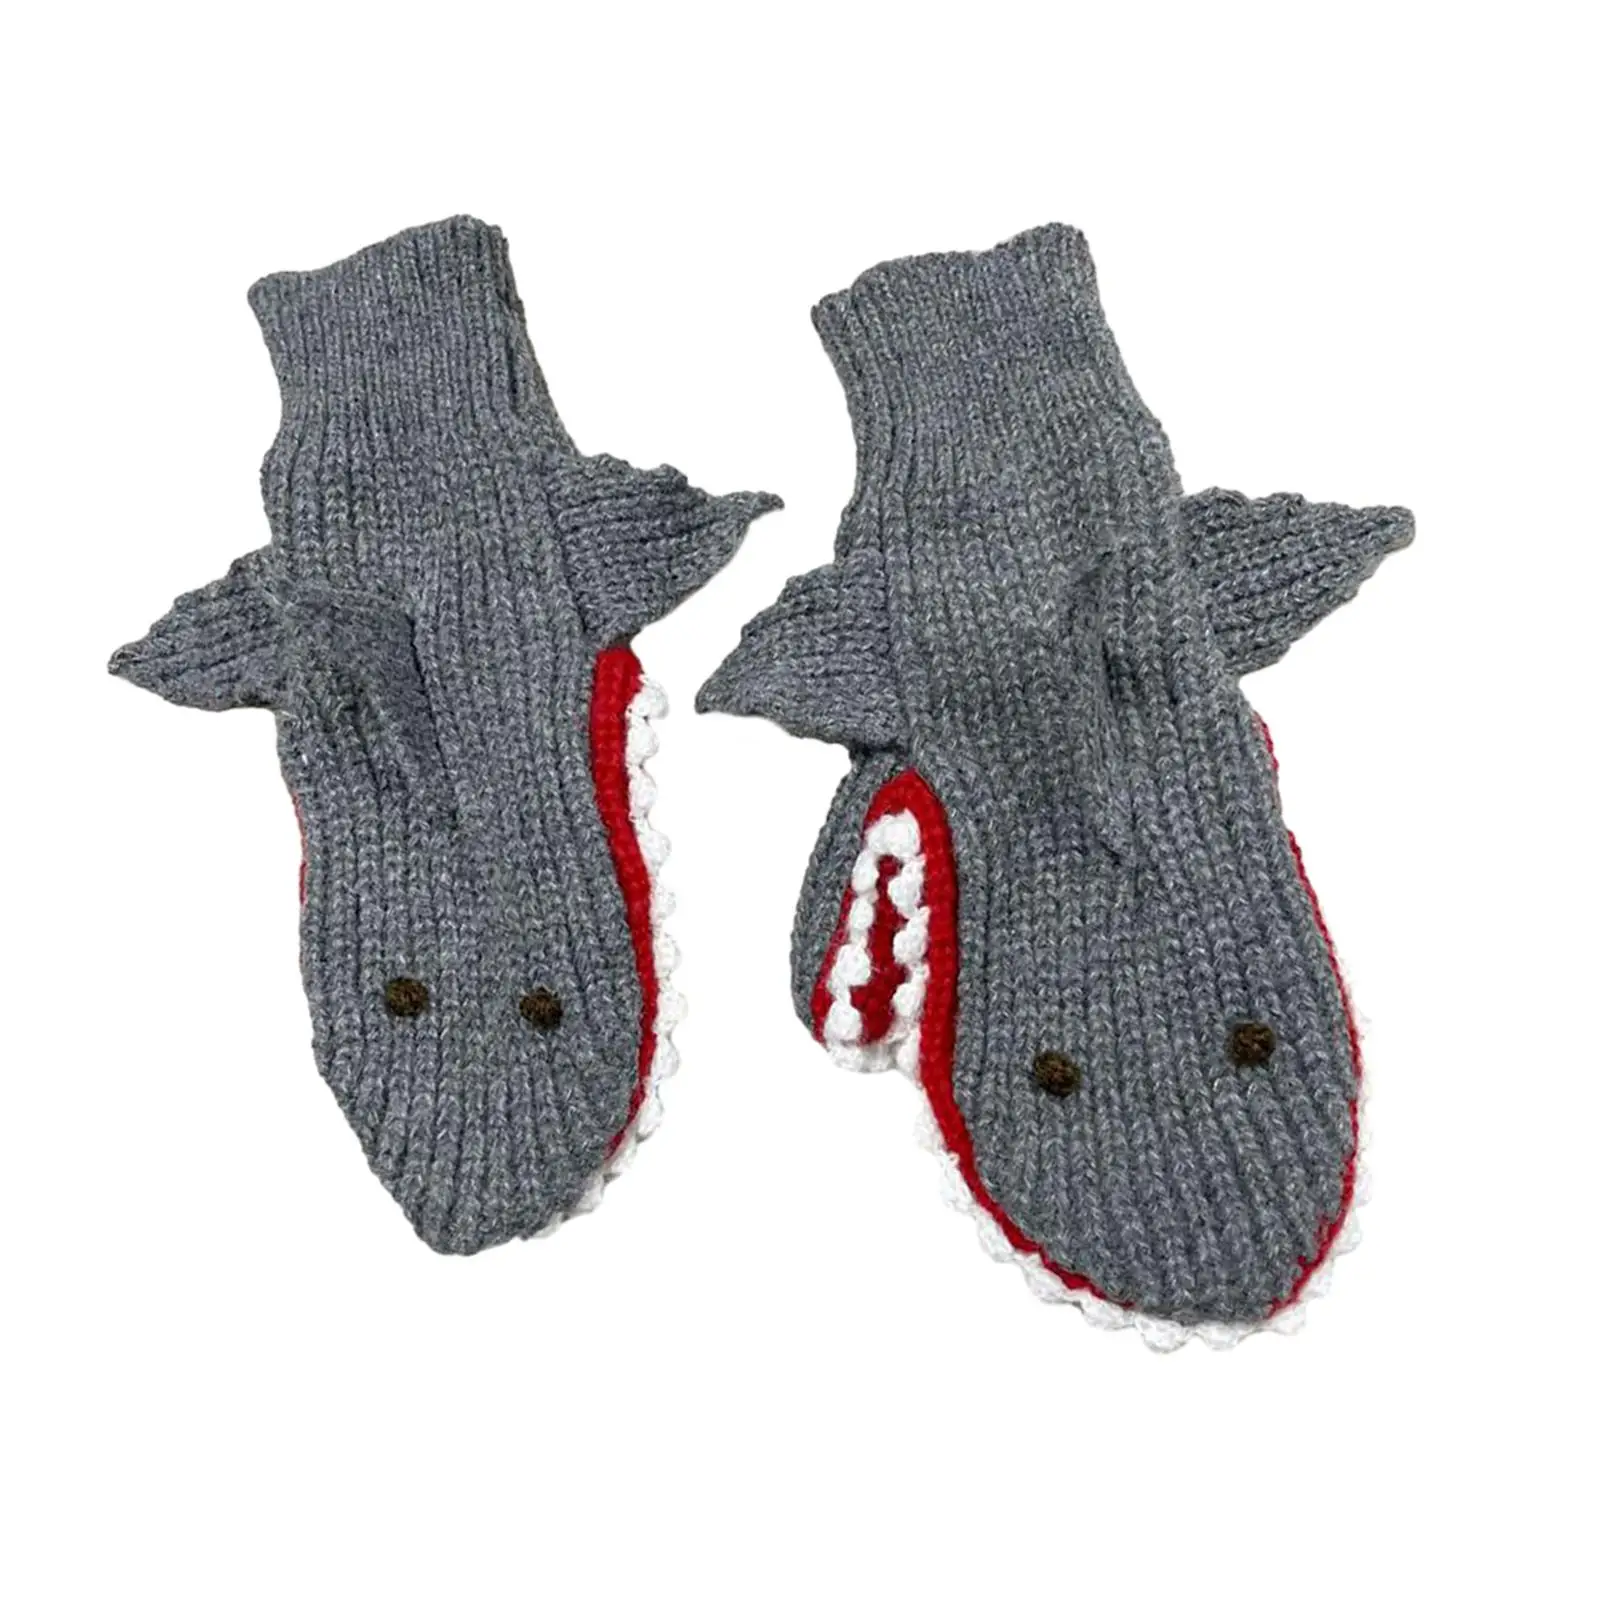 Shark Gloves Elastic Cuff Men Women Boys Girls Winter Warm Gloves Mitten Gloves Knit Glove for Running Hiking Outdoor Christmas